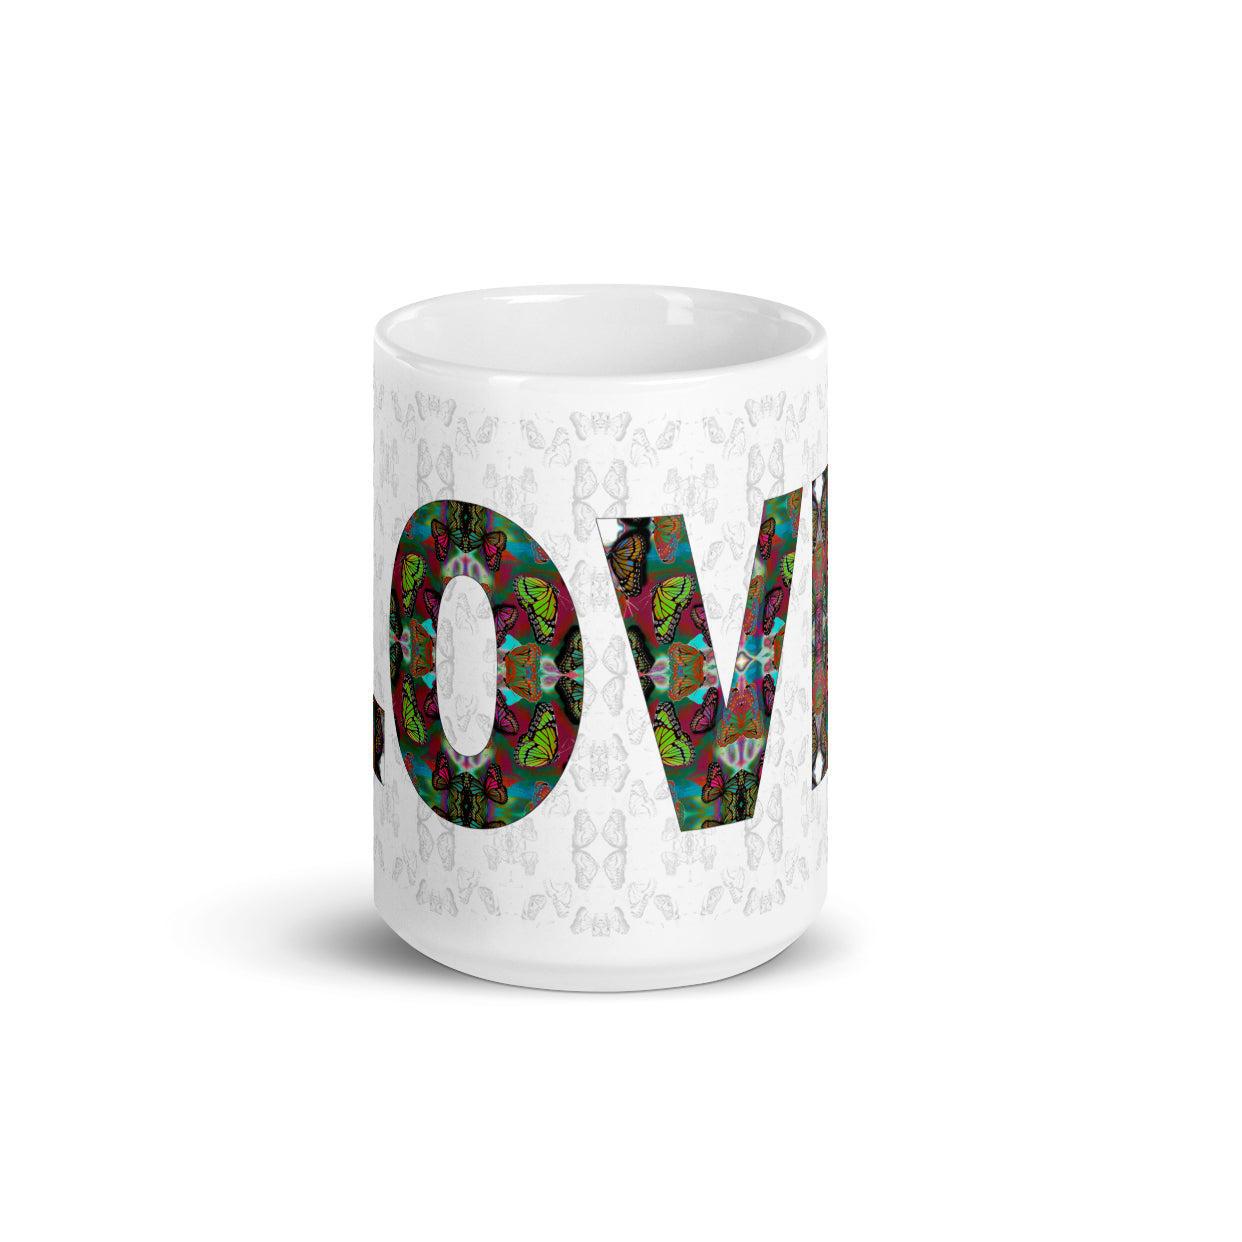 Love ~ LOVE ETERNAL Ceramic Mug; Colorful Butterflies Printed Words, Valentine's Day Gift